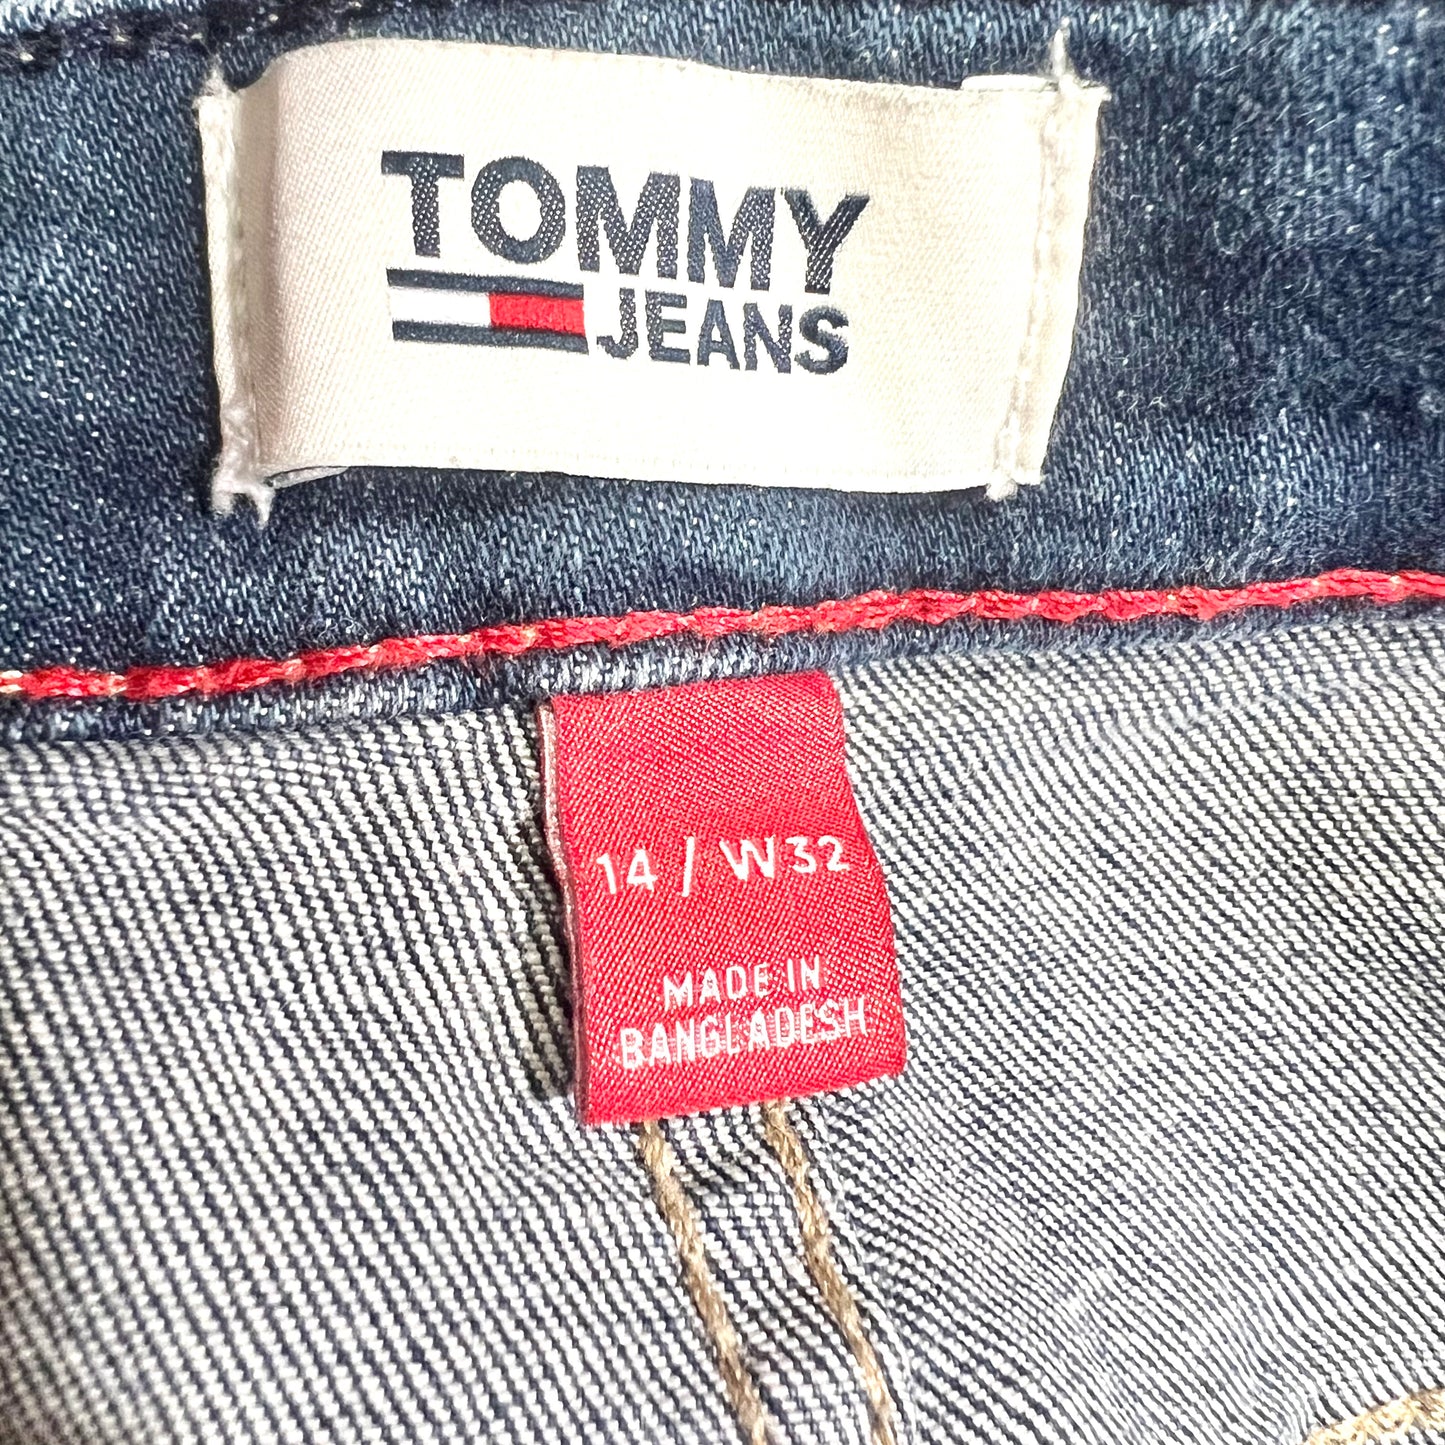 Shorts By Tommy Hilfiger  Size: 14